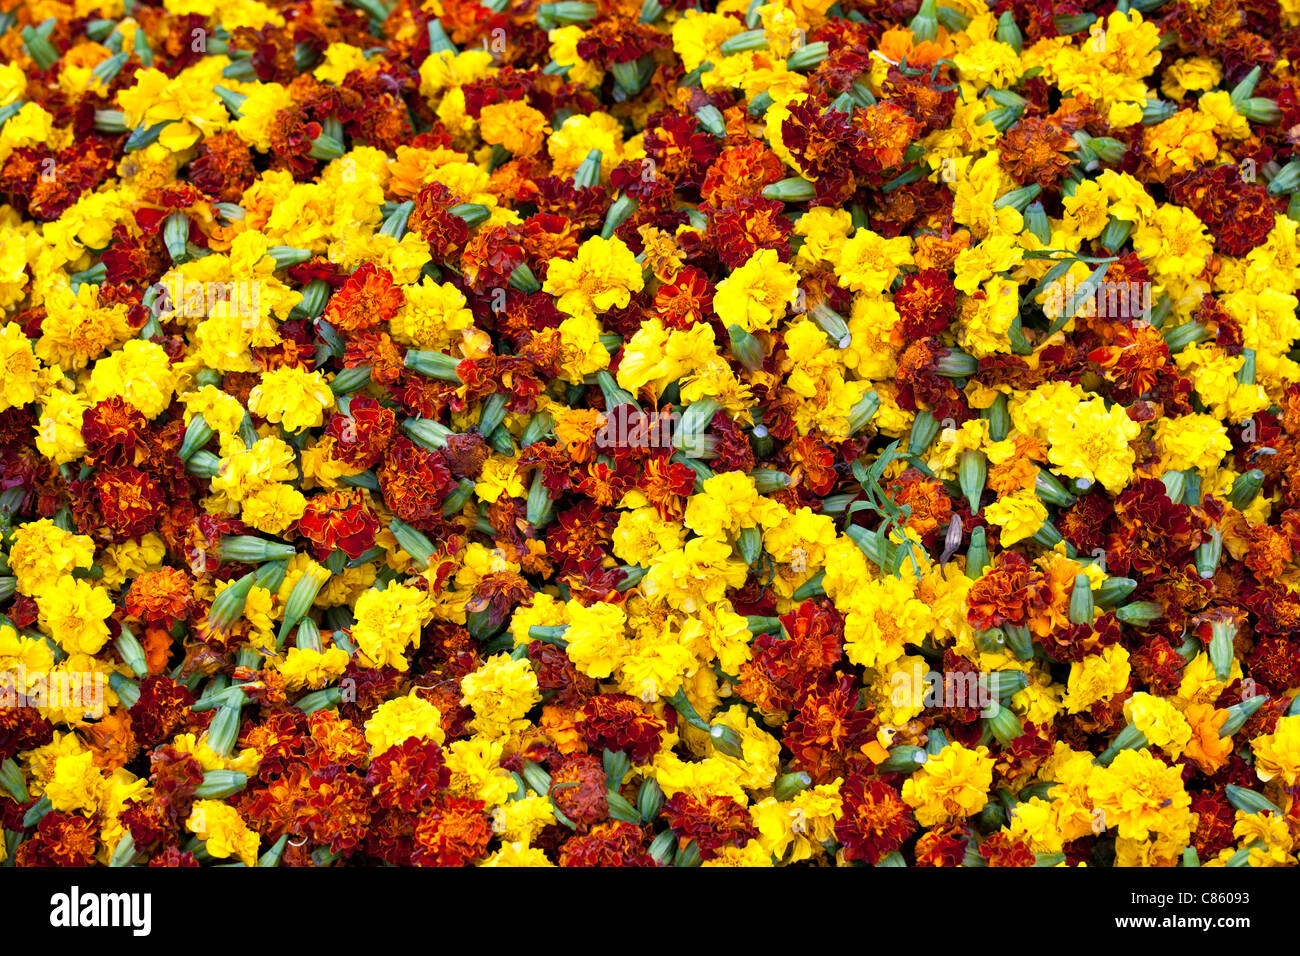 Ceremonial marigolds for garlands and religious ceremonies at Mehrauli Flower Market, New Delhi Stock Photo